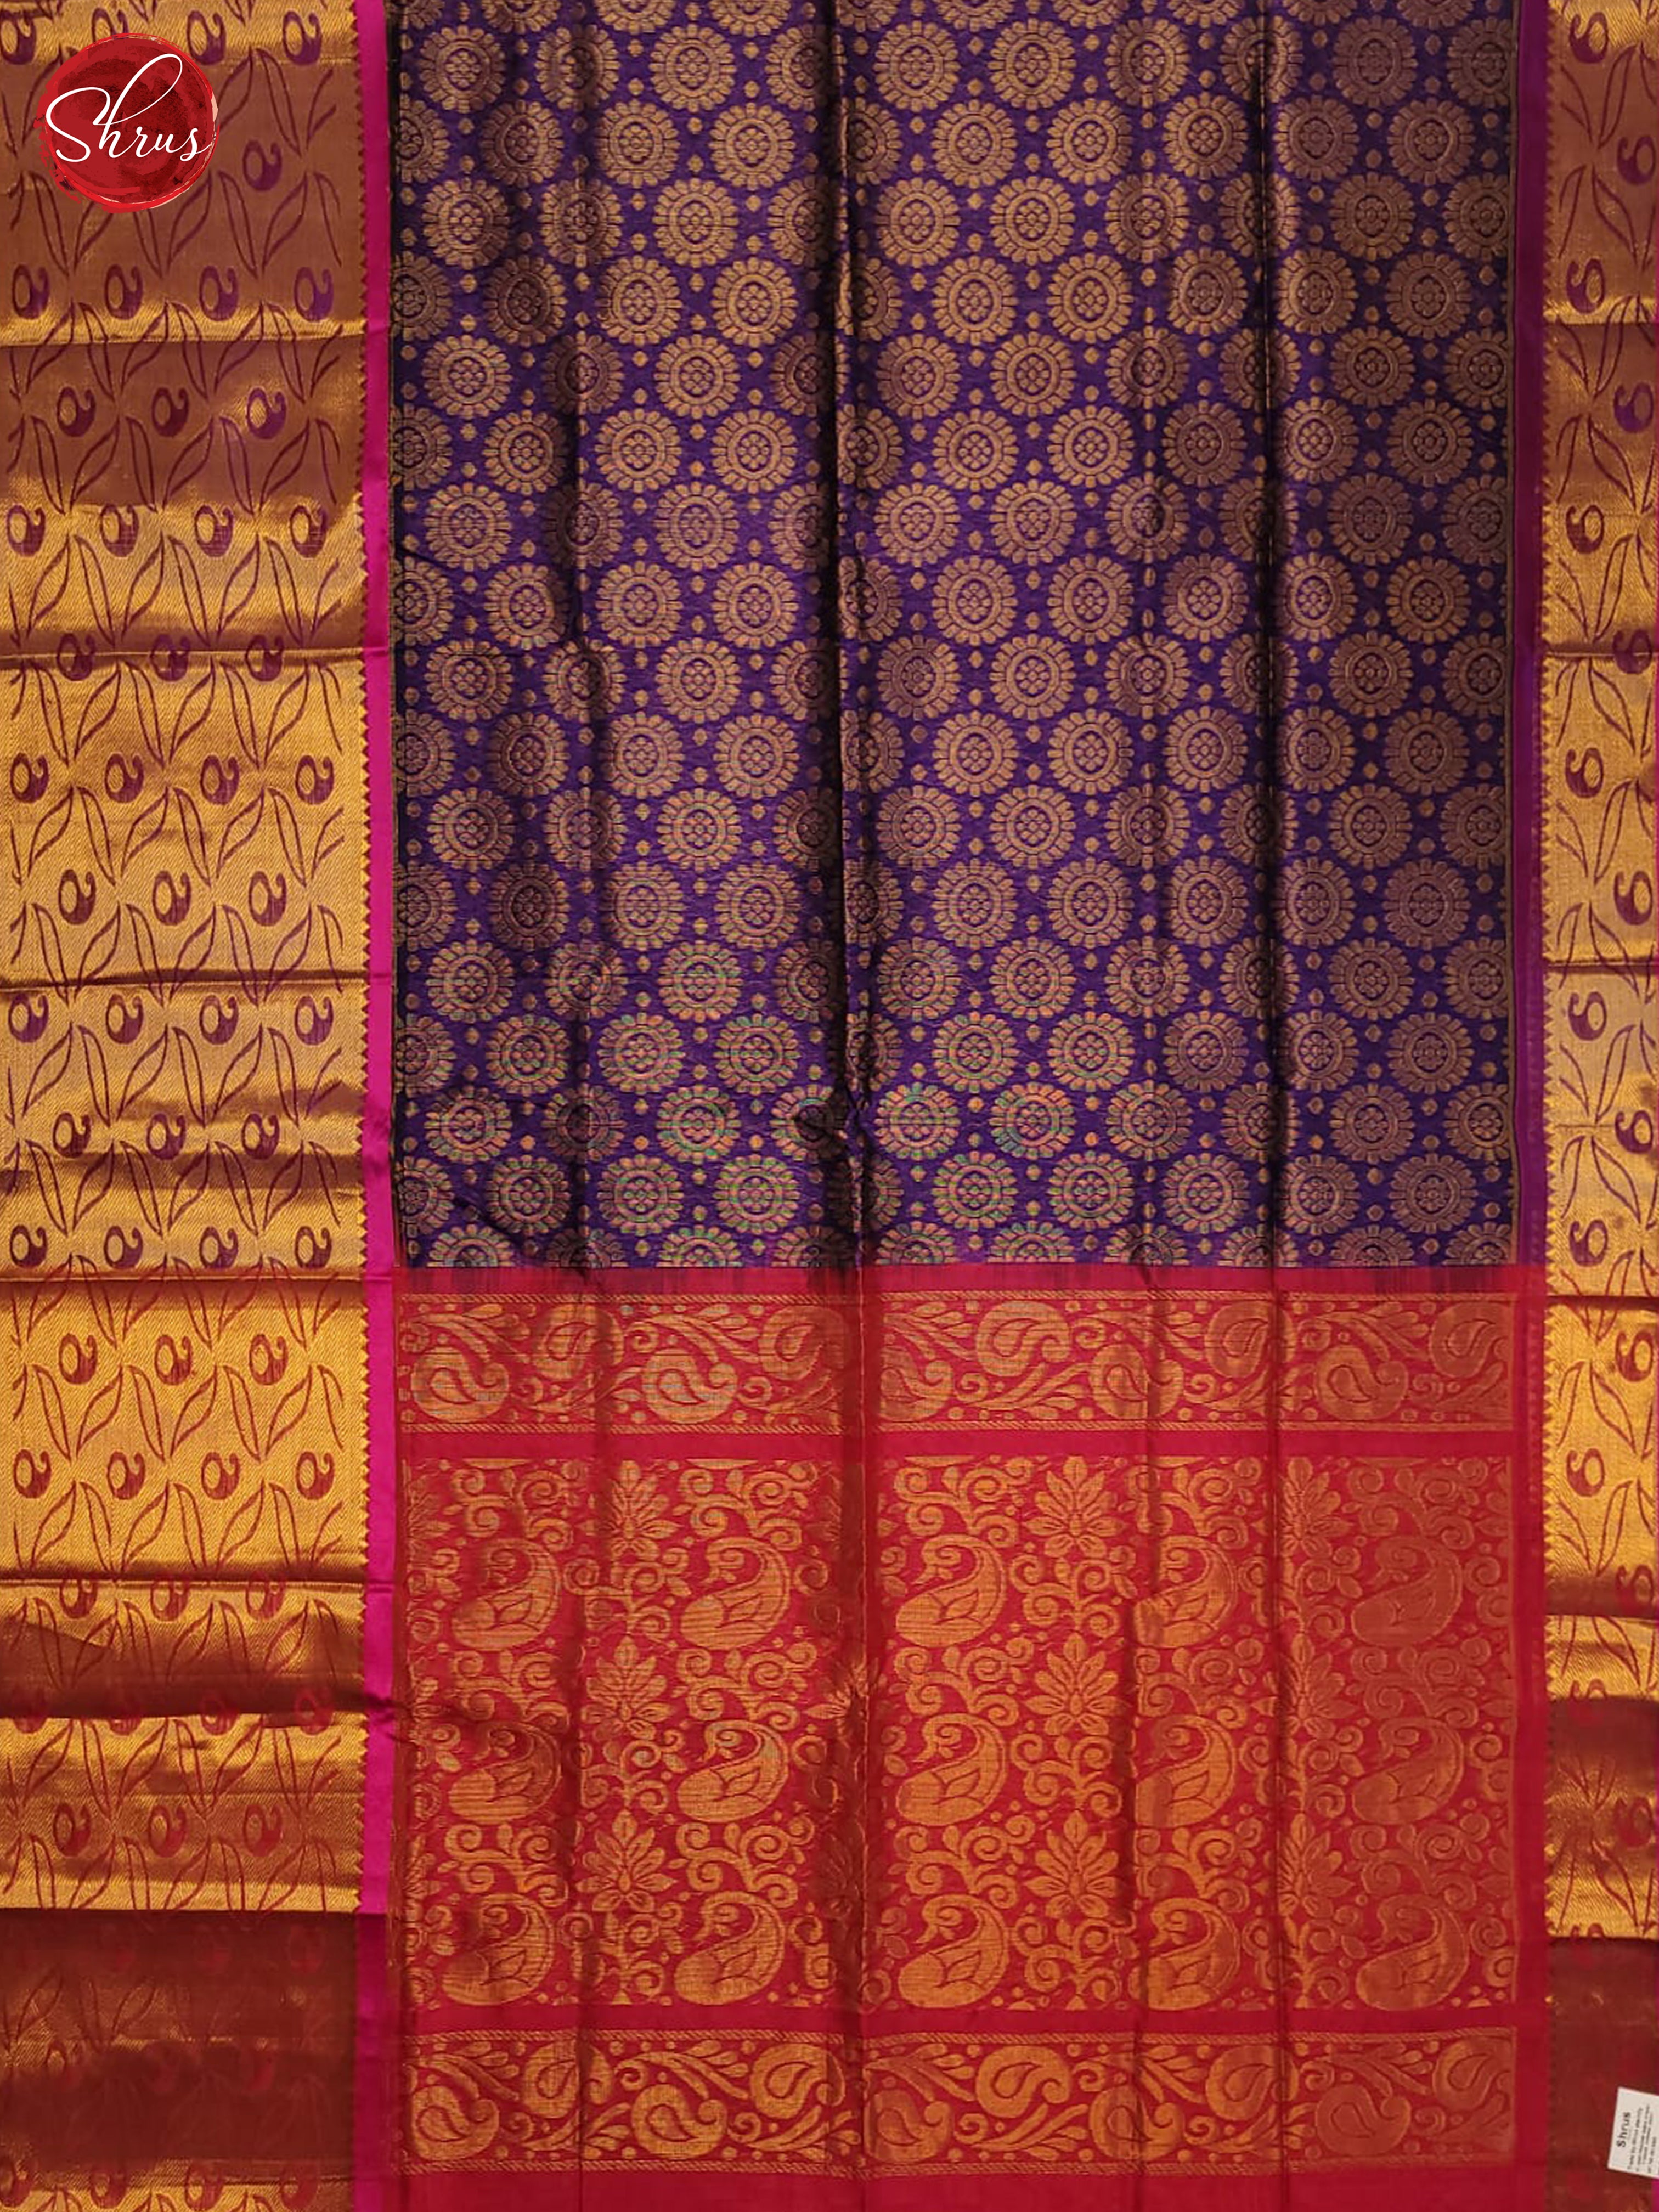 Blue & Pink - Silk Cotton Saree - Shop on ShrusEternity.com